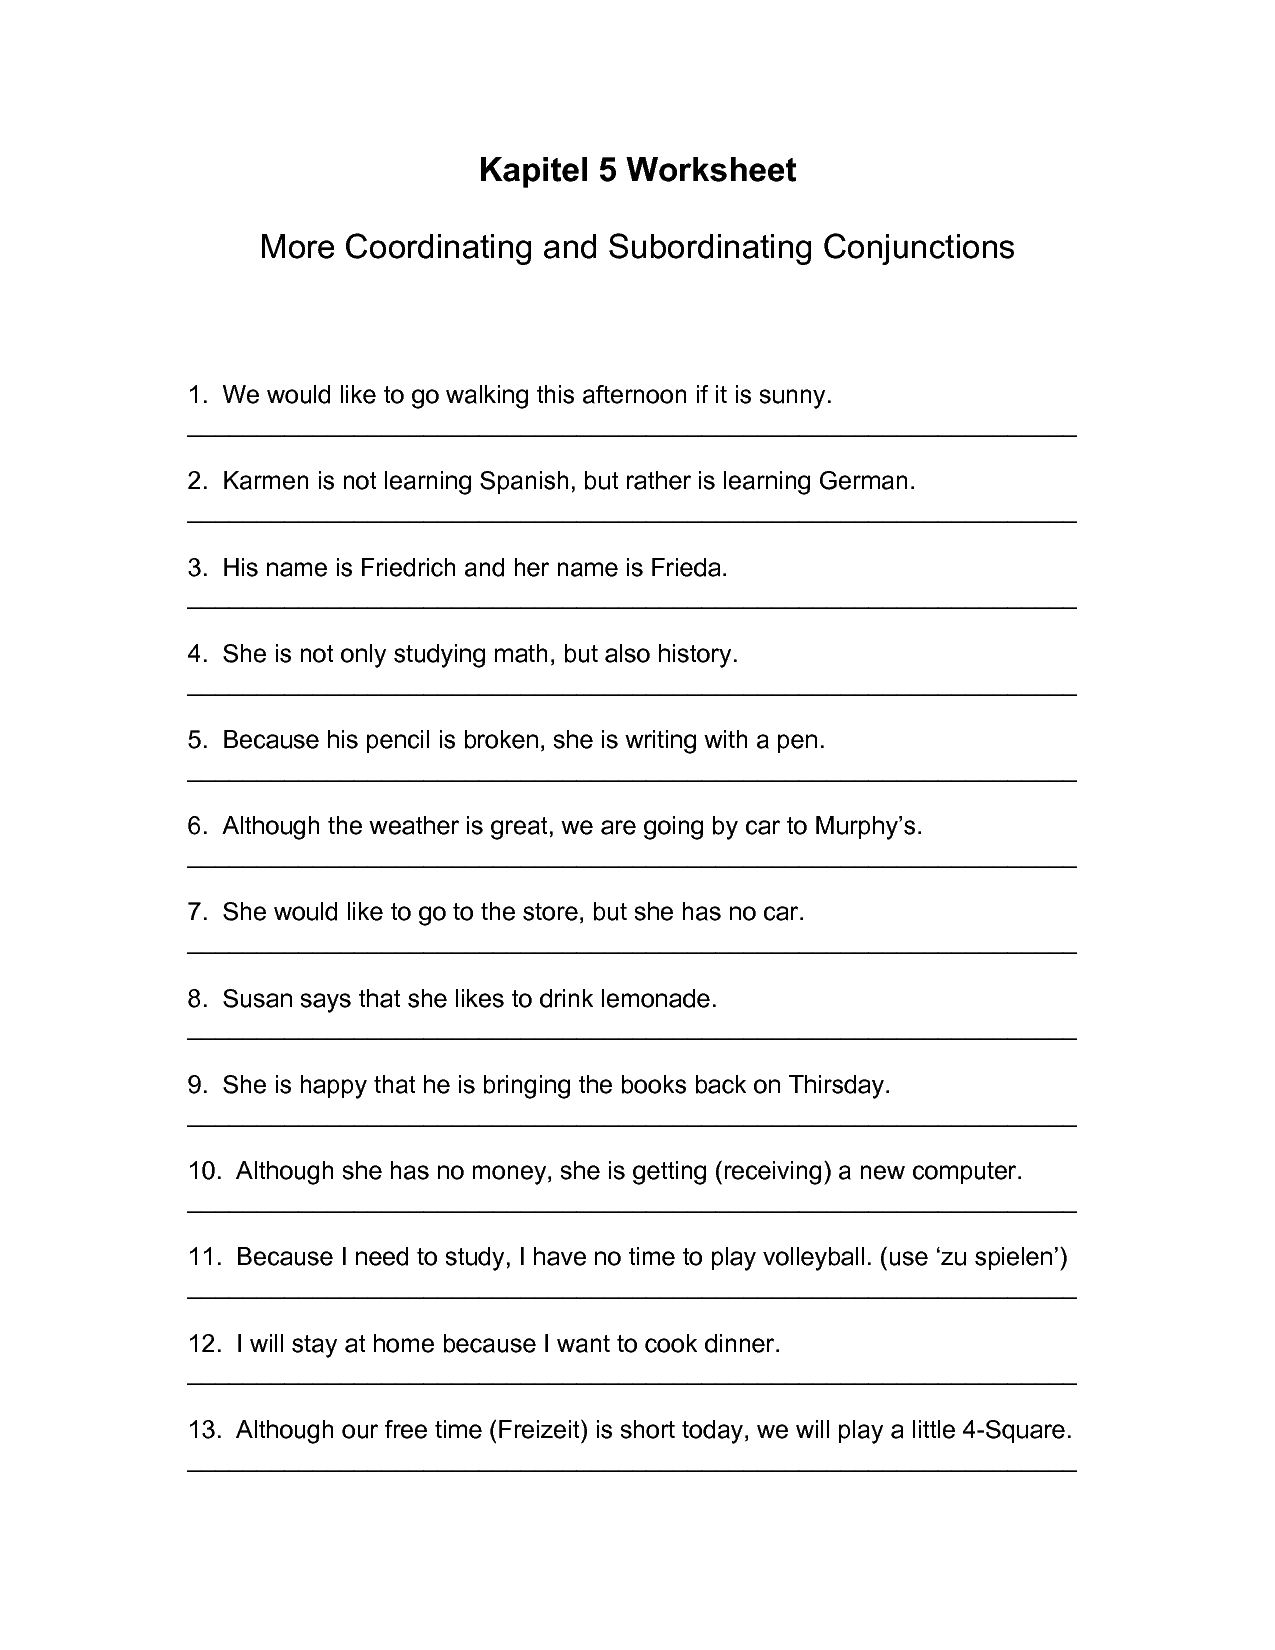 coordinating-conjunctions-worksheets